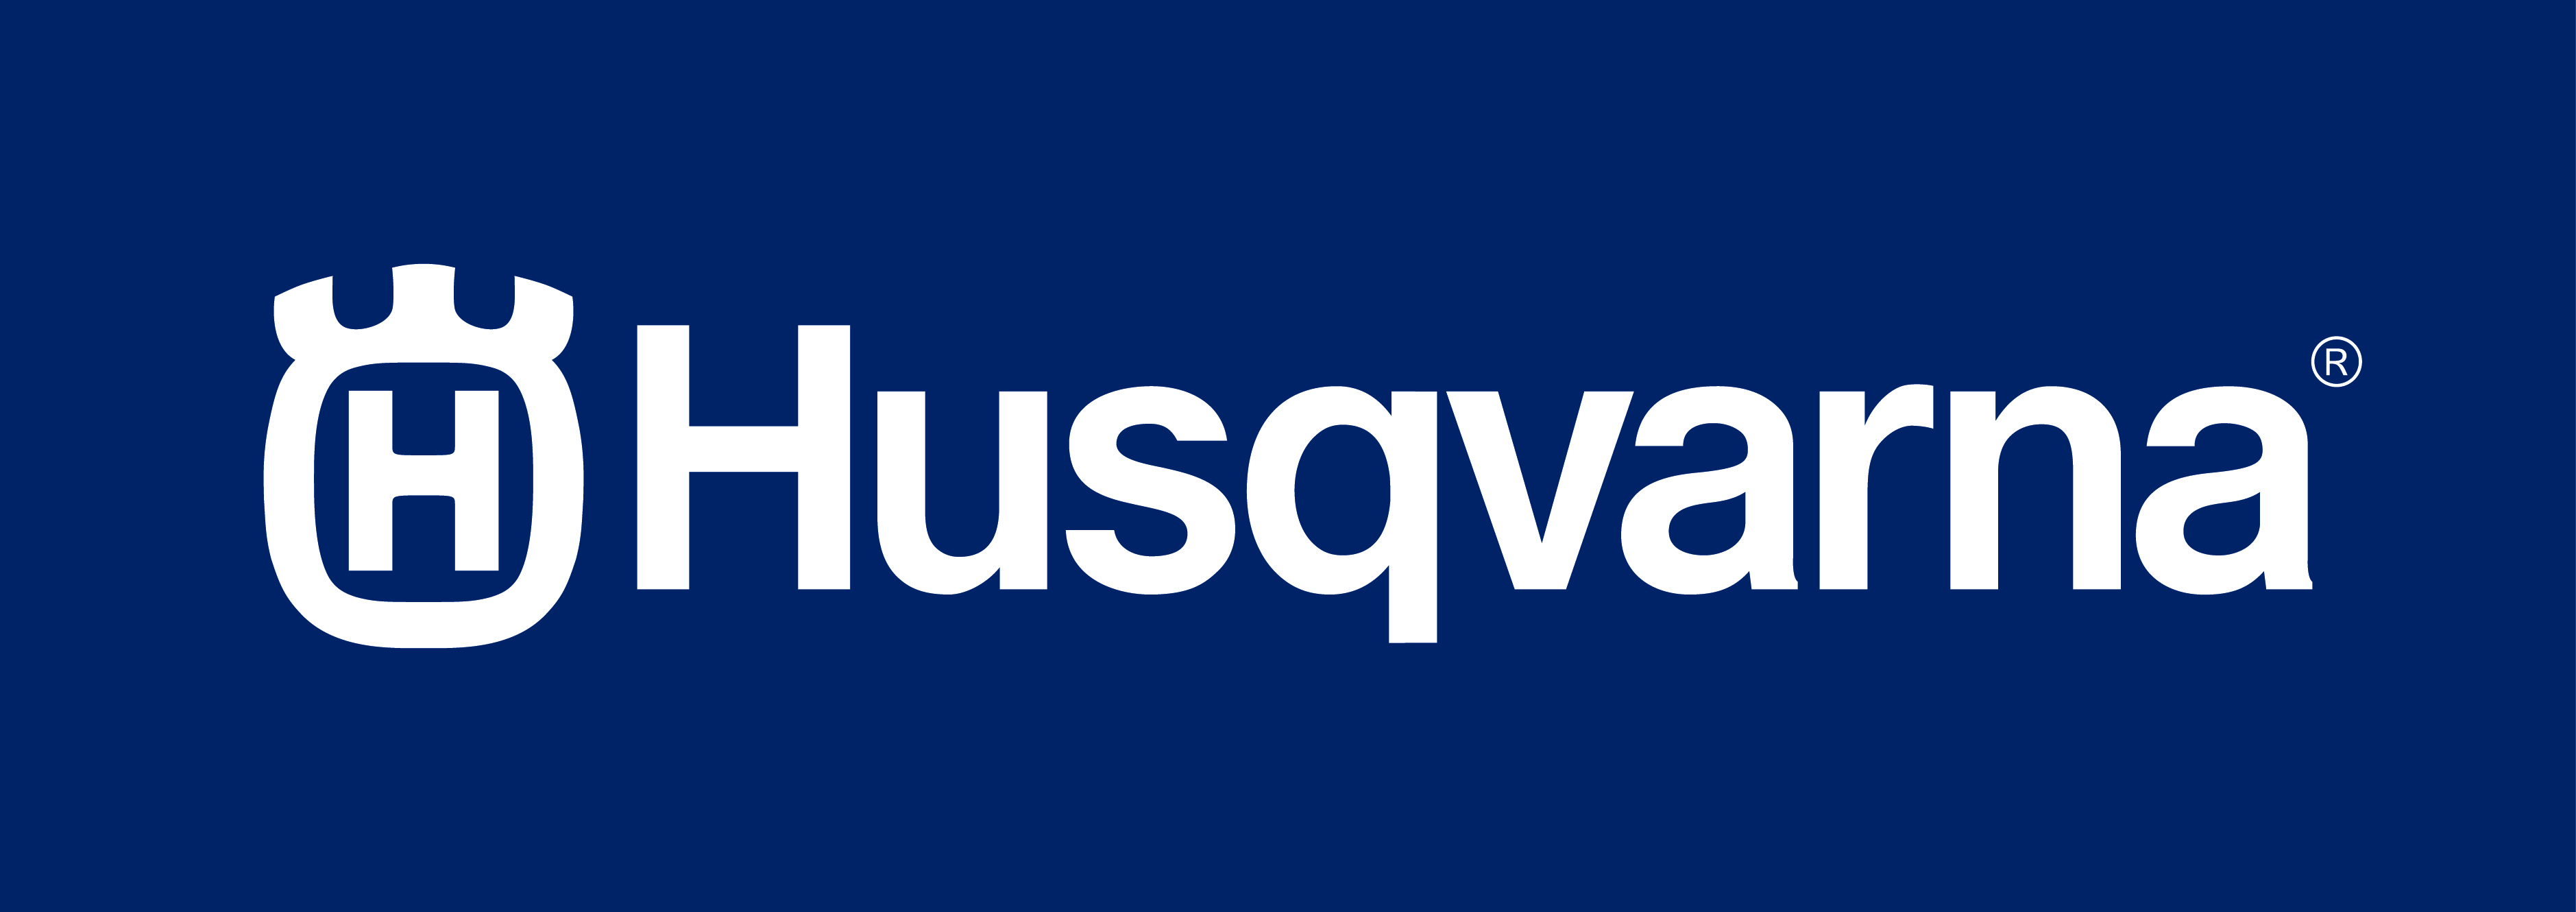 HUSQVARNA - logo